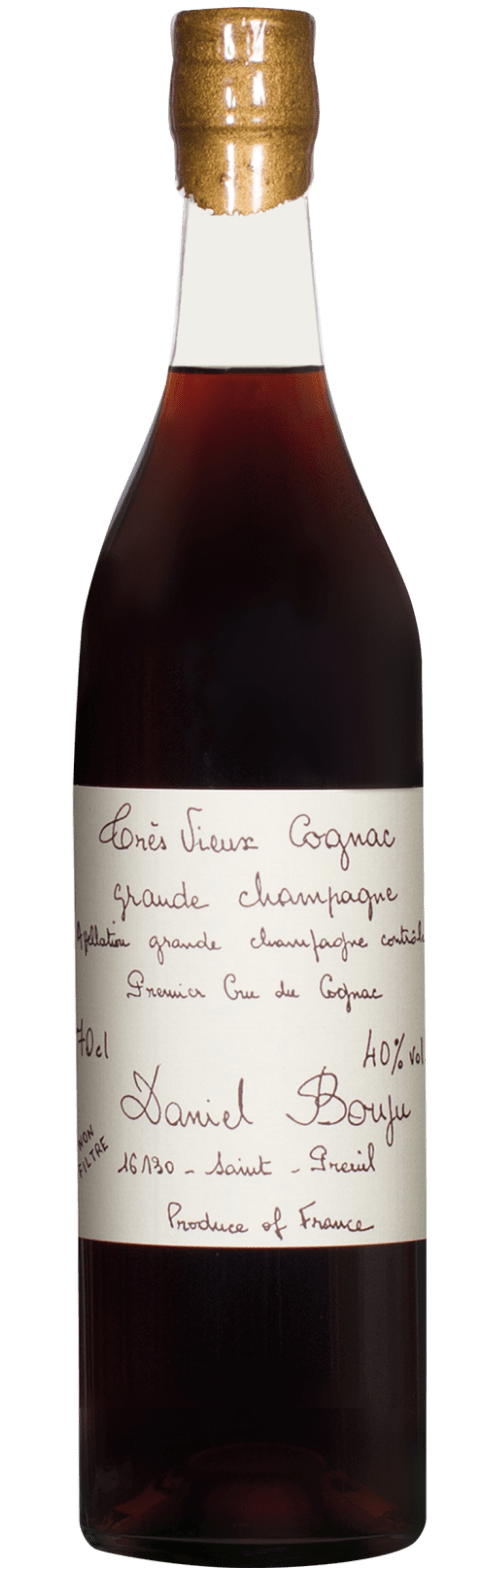 Tres Vieux Cognac Grande Champagne A.C.C. Daniel Bouju